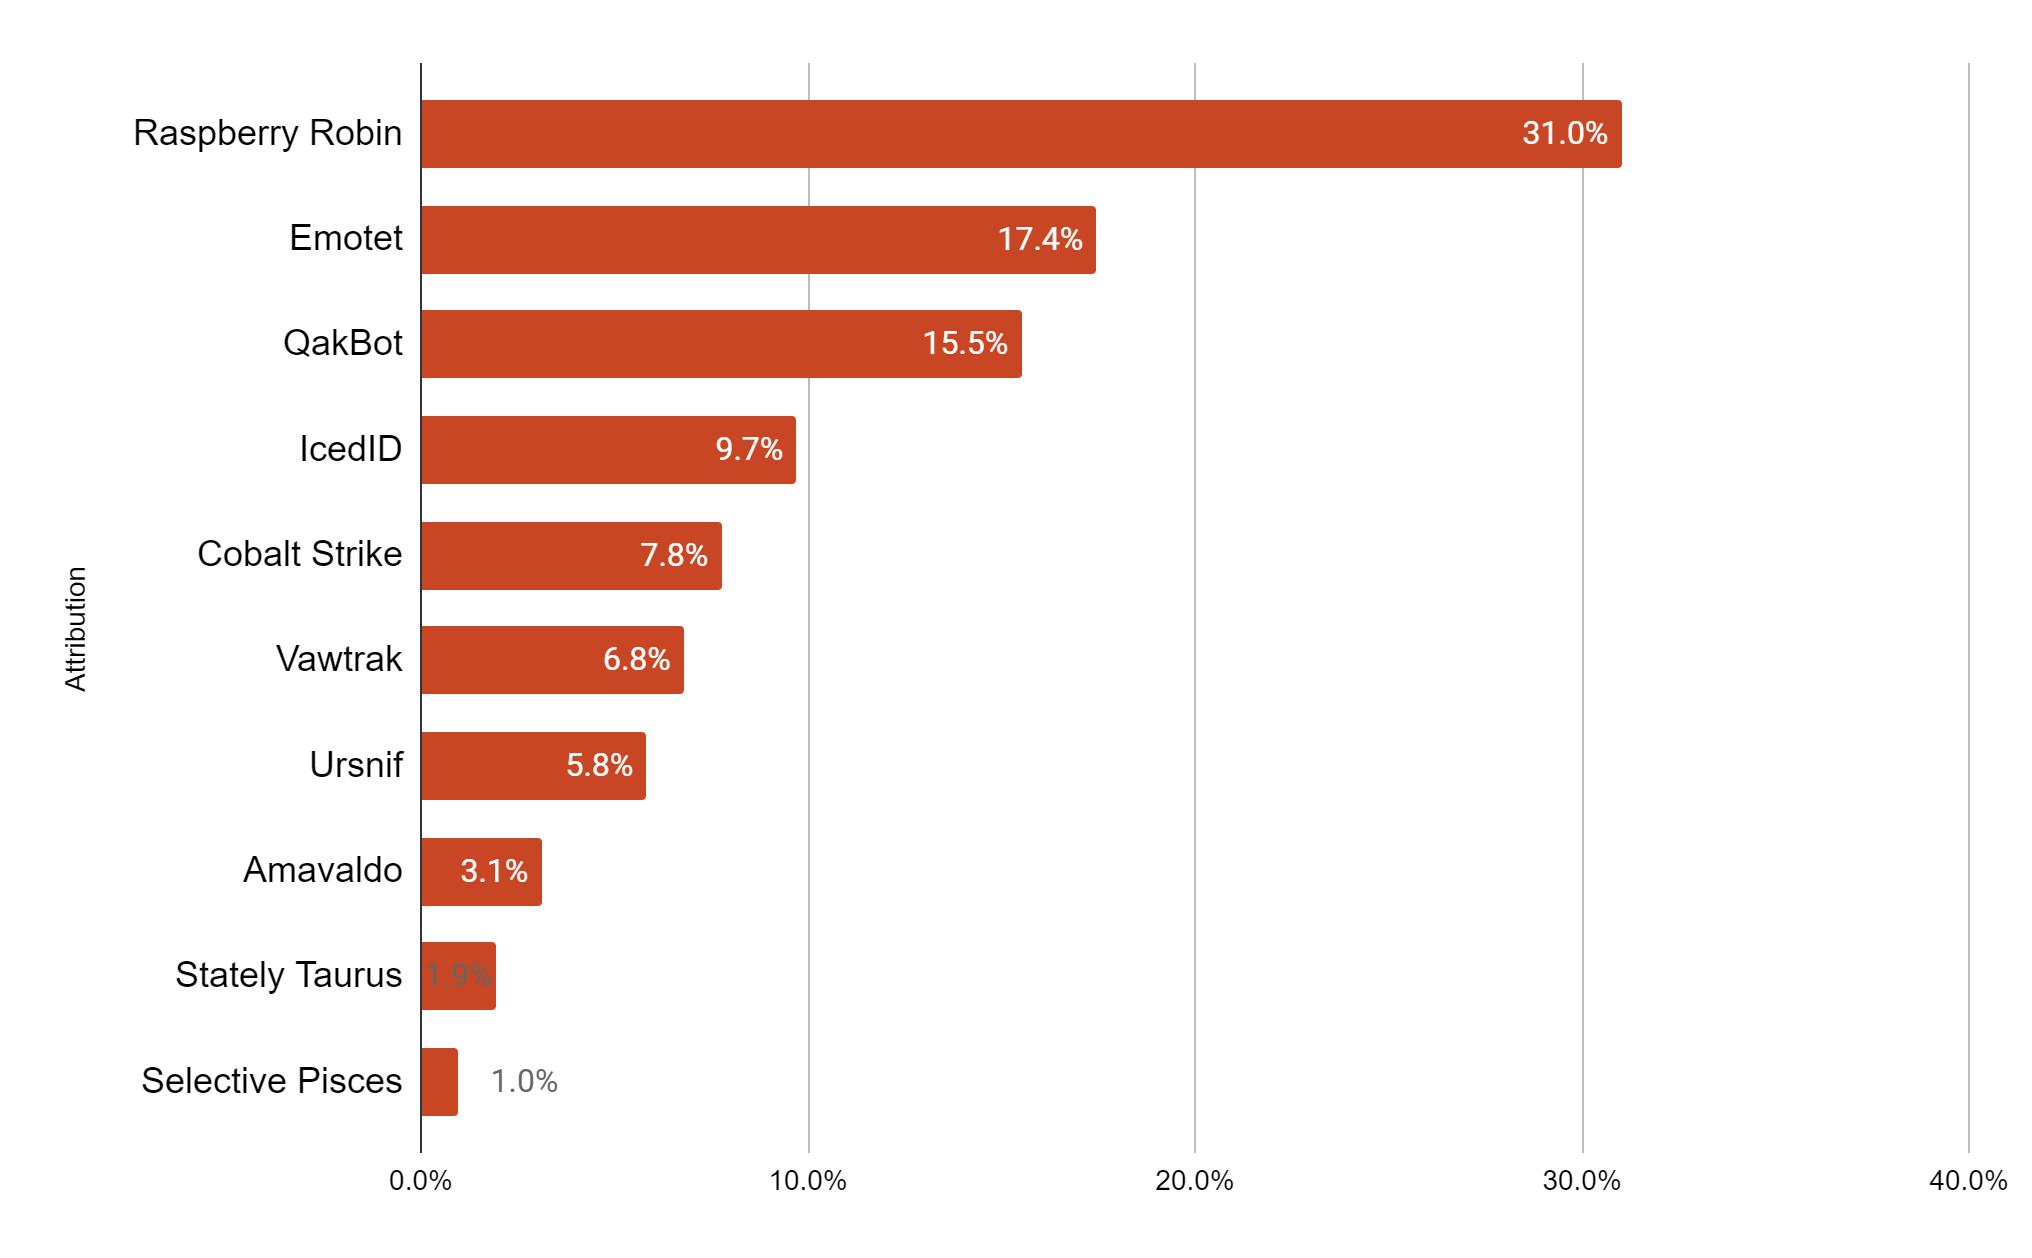 Malware observed using DLL loading between February-August 2022: Raspberry Robin (31.0%), Emotet (17.4%), QakBot (15.5%), IcedID (9.7%), Cobalt Strike (7.8%), Vawtrak (6.8%), Ursnif (5.8%), Amavaldo (3.1%), Stately Taurus (1.9%), Selective Pisces (1.0%)